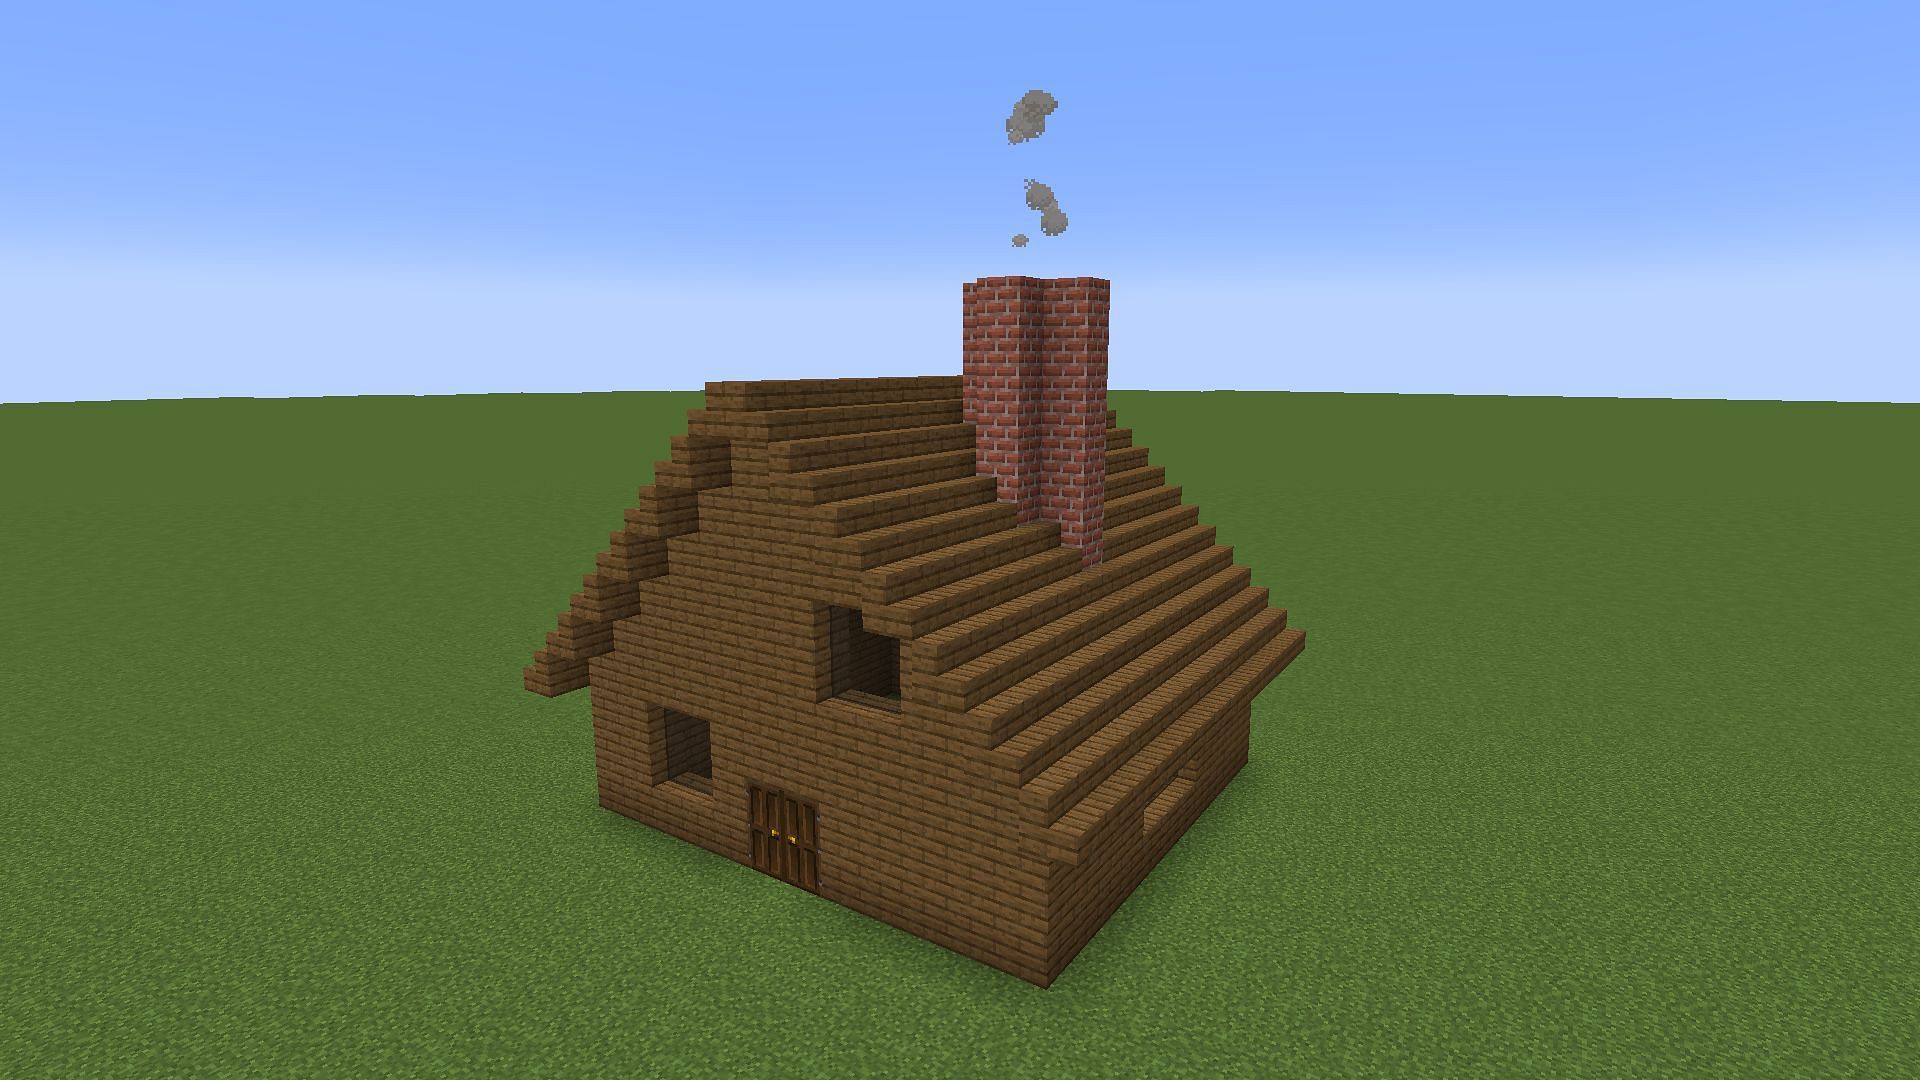 Hut with chimney (Image via Minecraft)